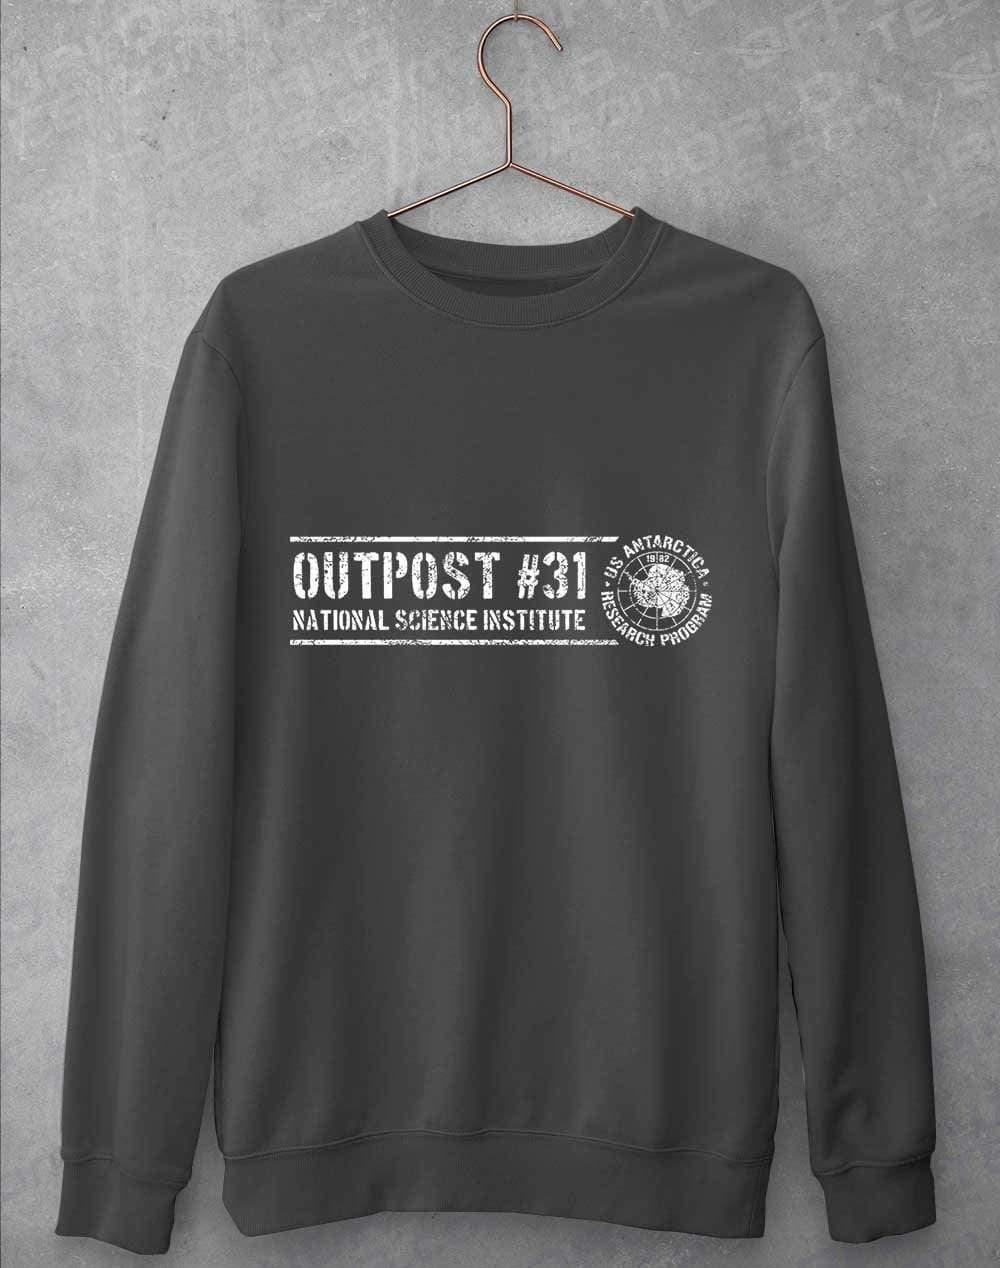 Outpost 31 Antarctica Sweatshirt S / Charcoal  - Off World Tees